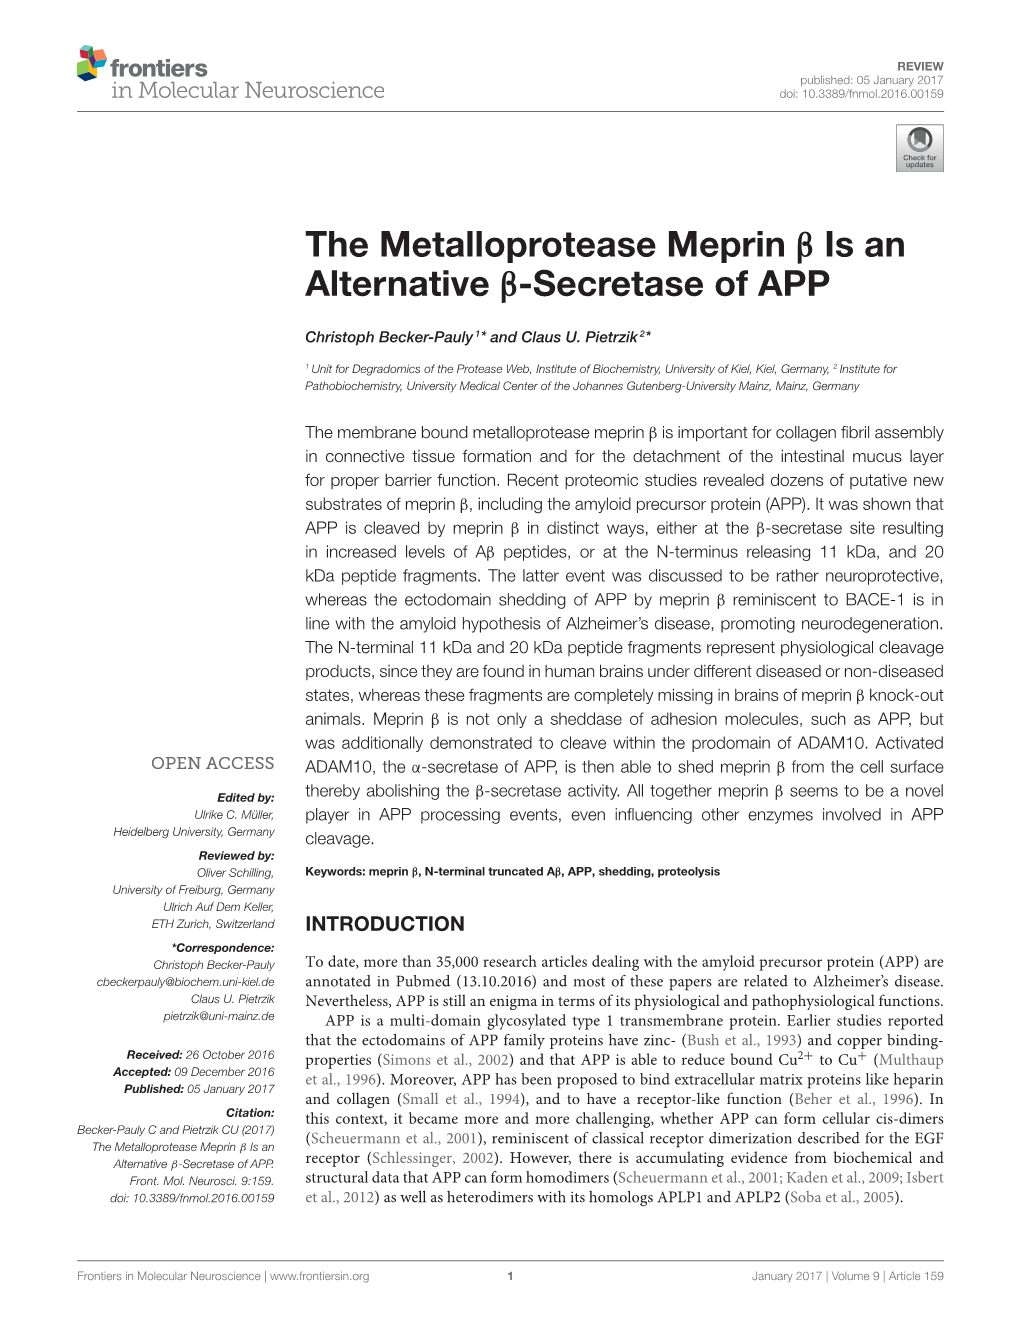 The Metalloprotease Meprin Β Is an Alternative Β-Secretase of APP